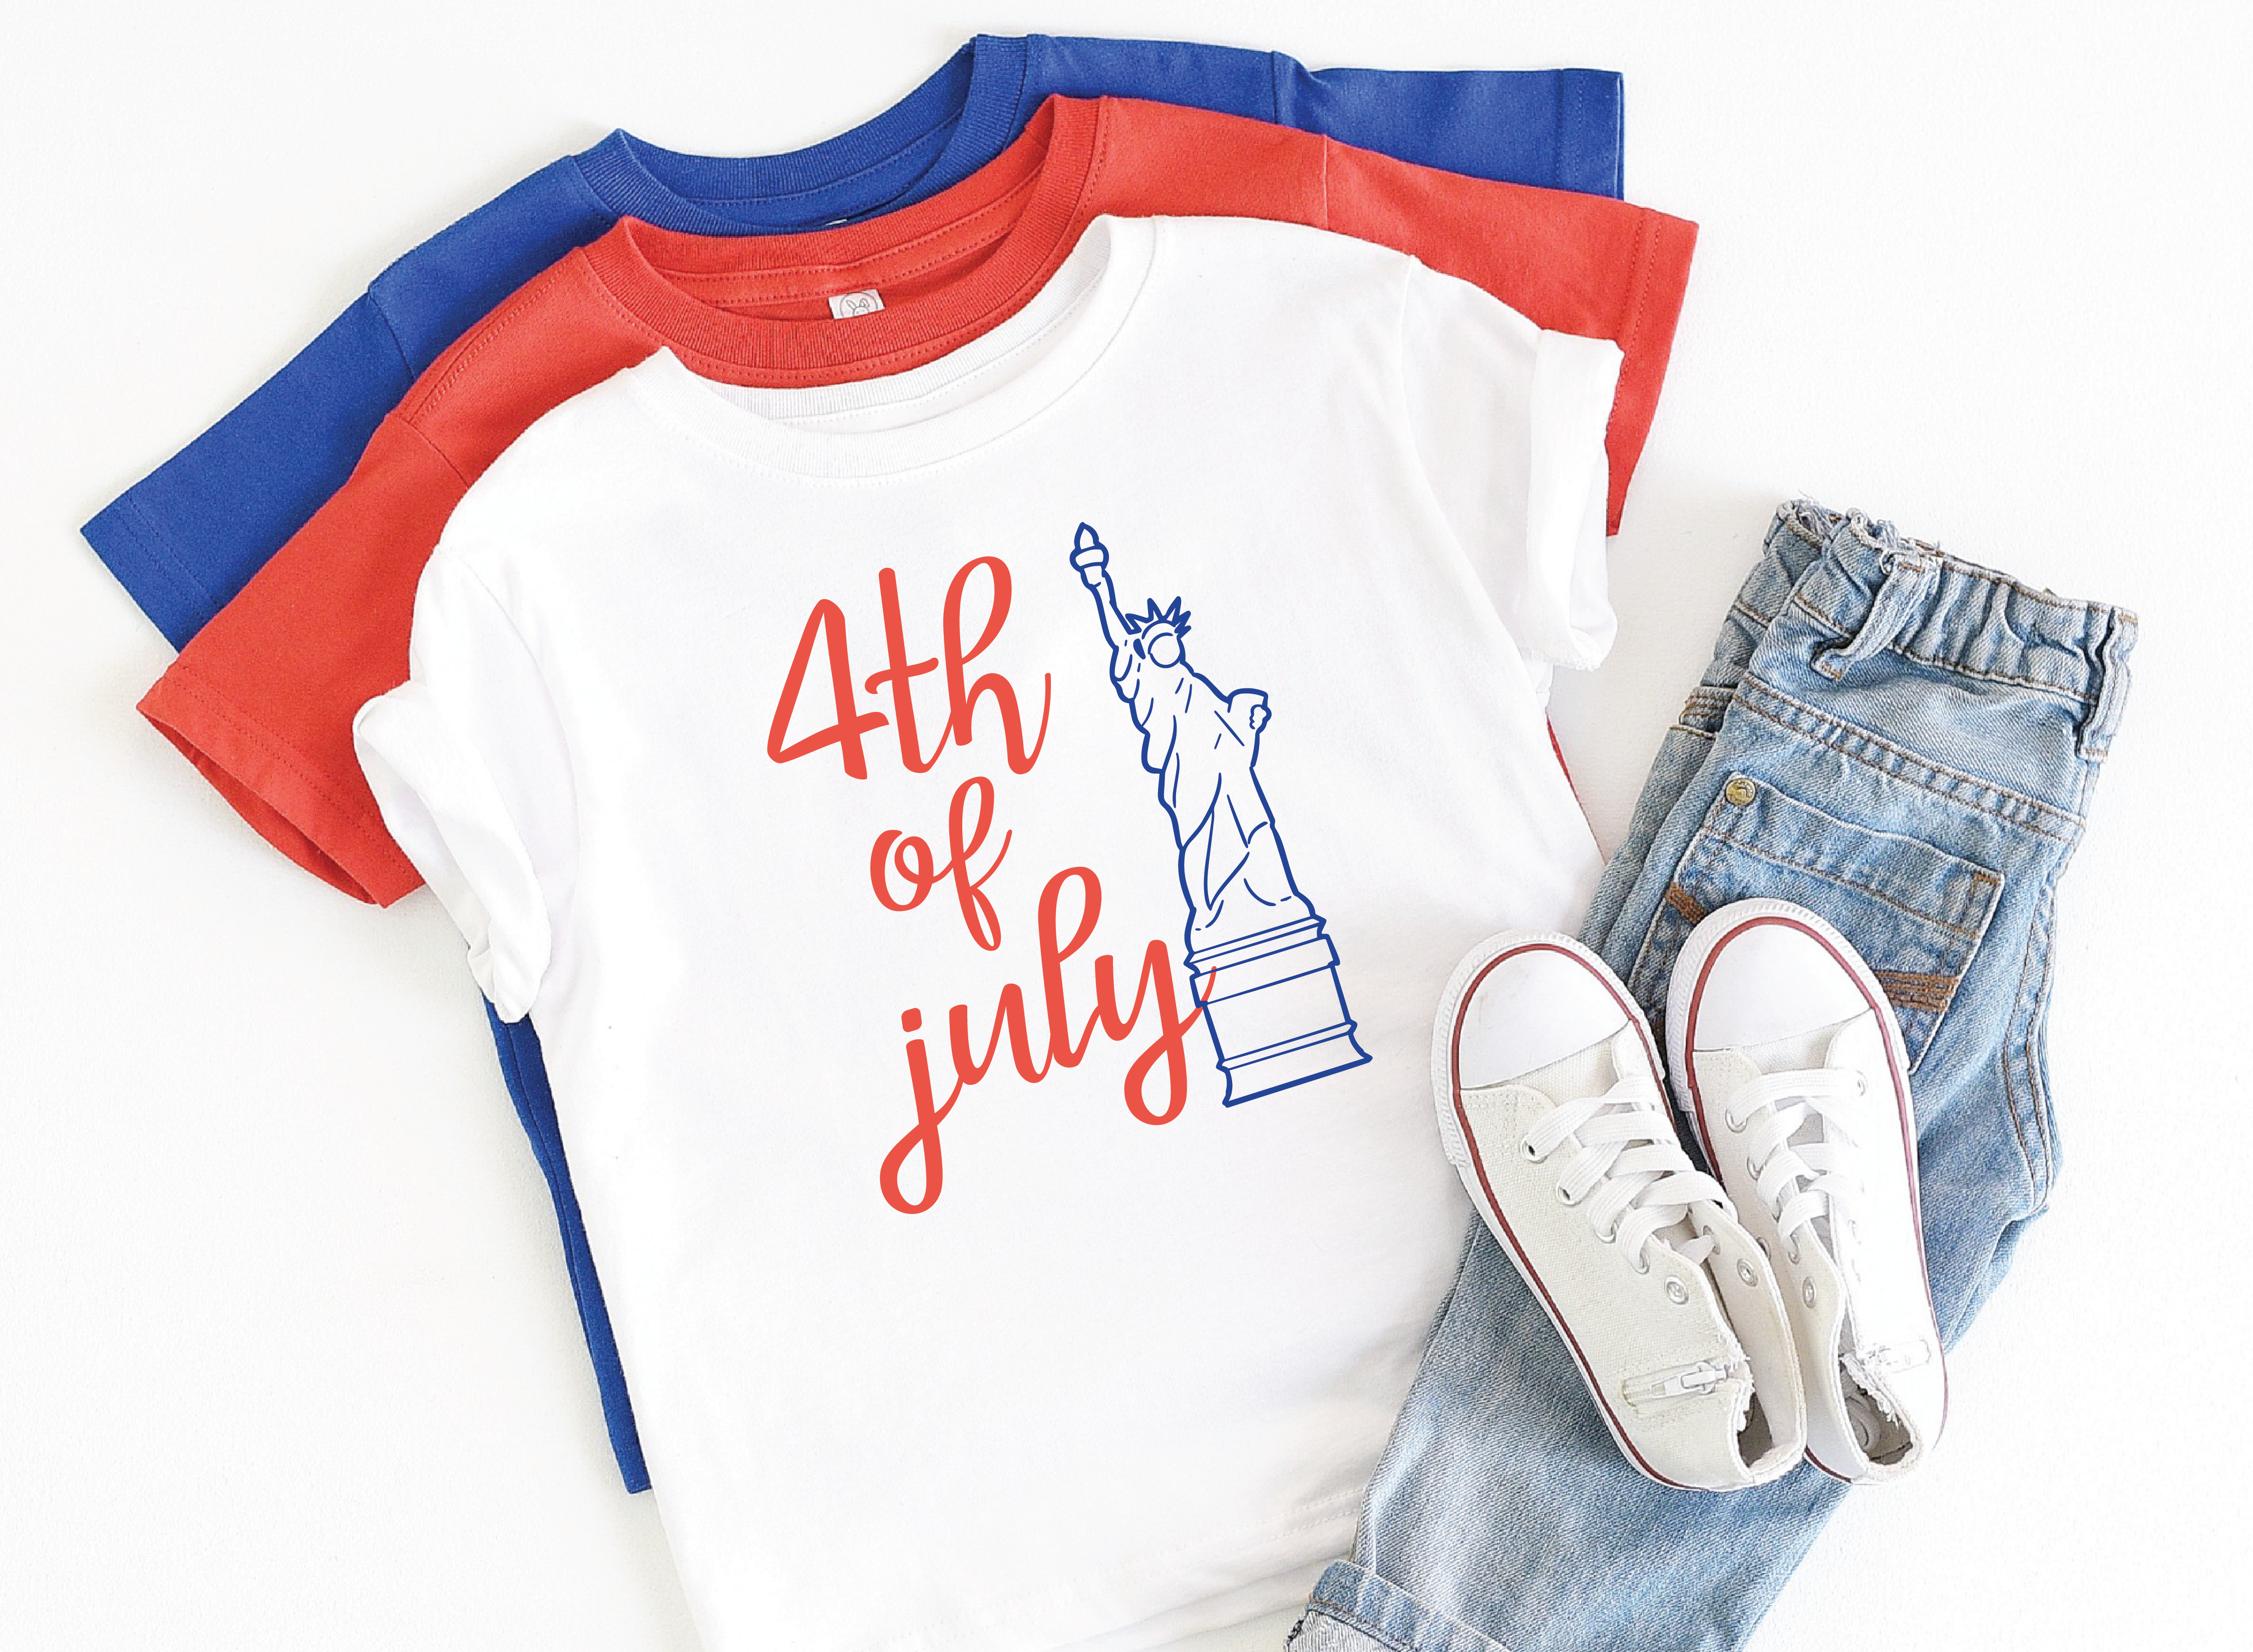 Fourth of July Shirts